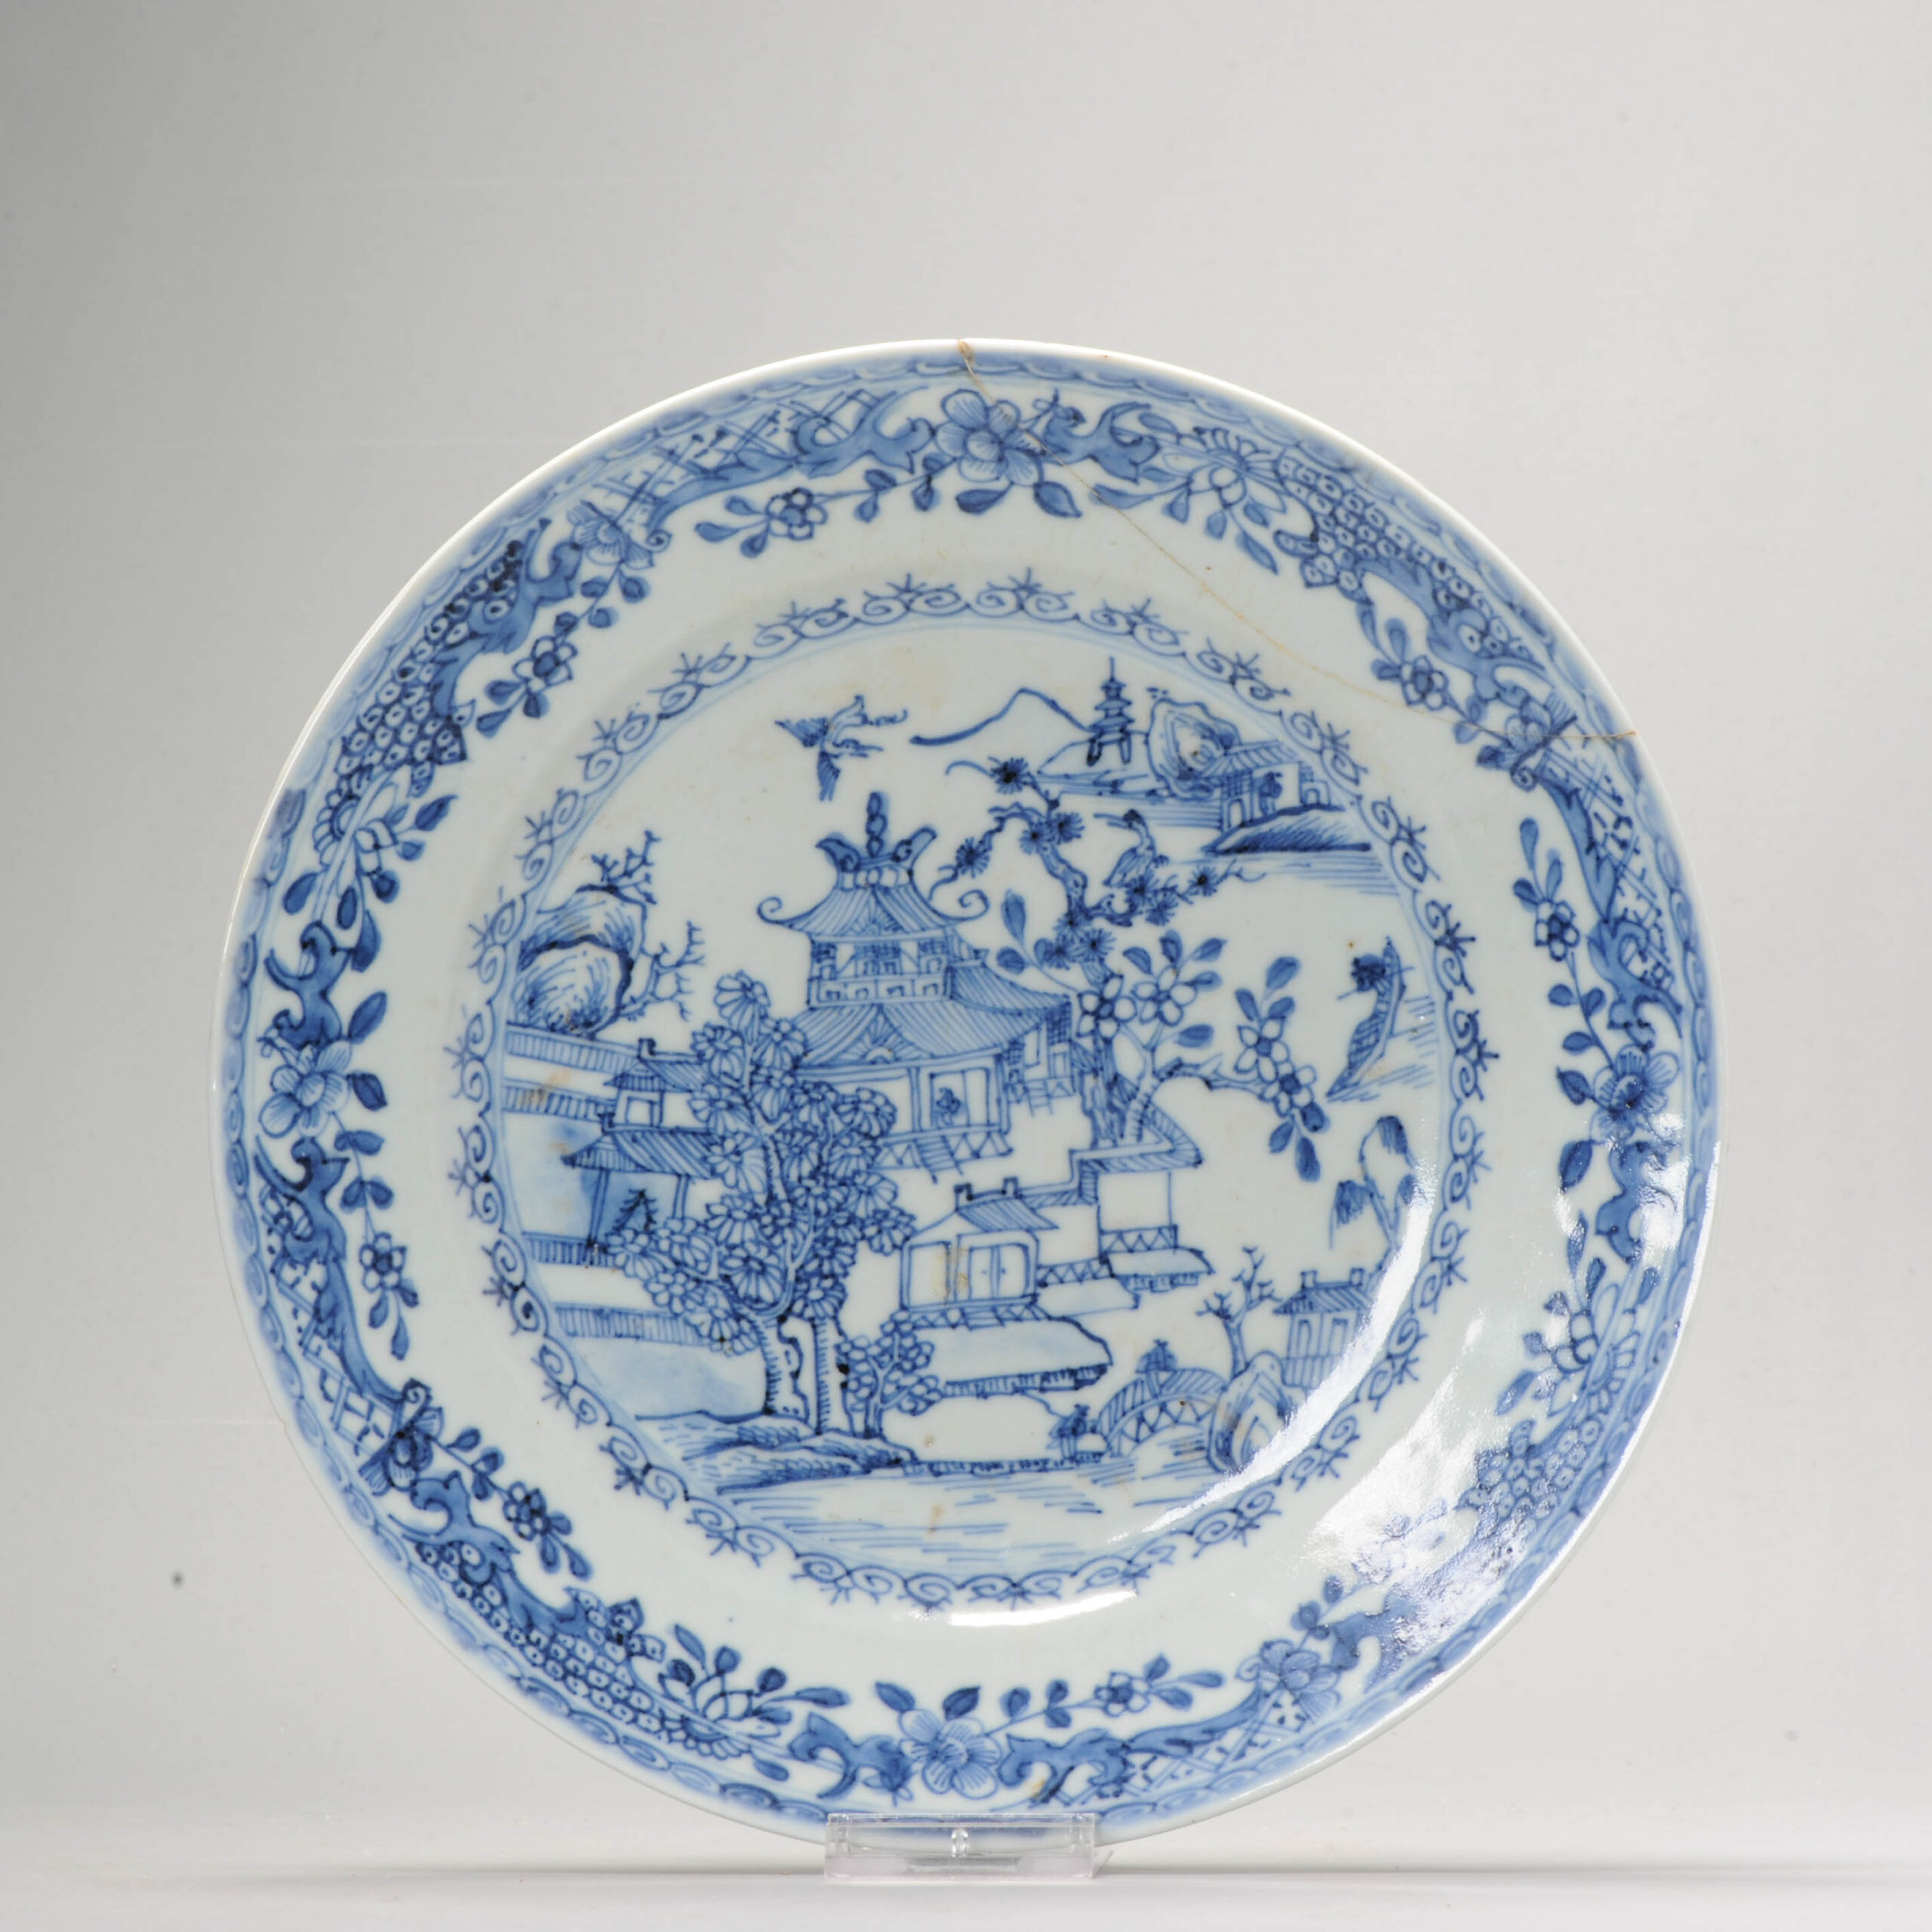 A Landscape Qianlong Yonzheng Chinese Porcelain Blue and White Plate 1730- 1740 China